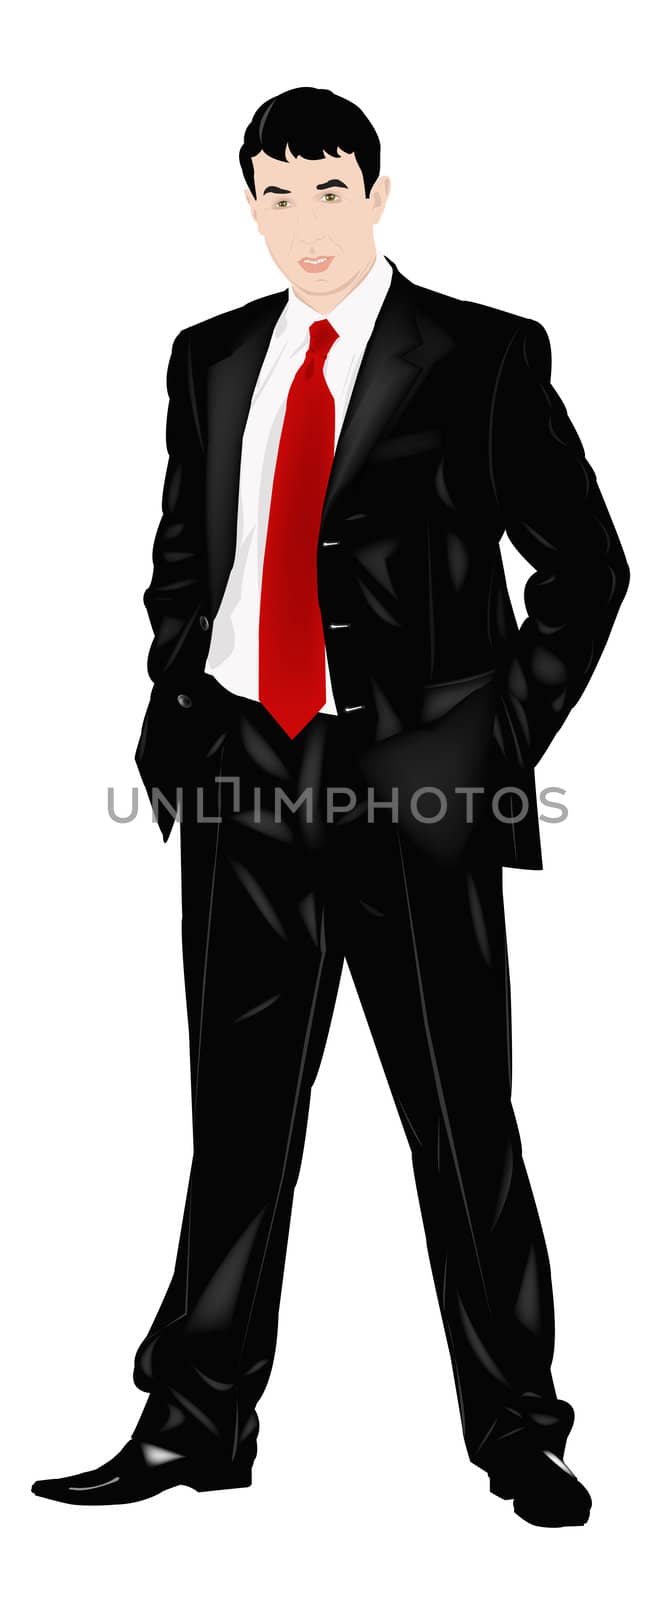 The elegant imposing businessman on a white background